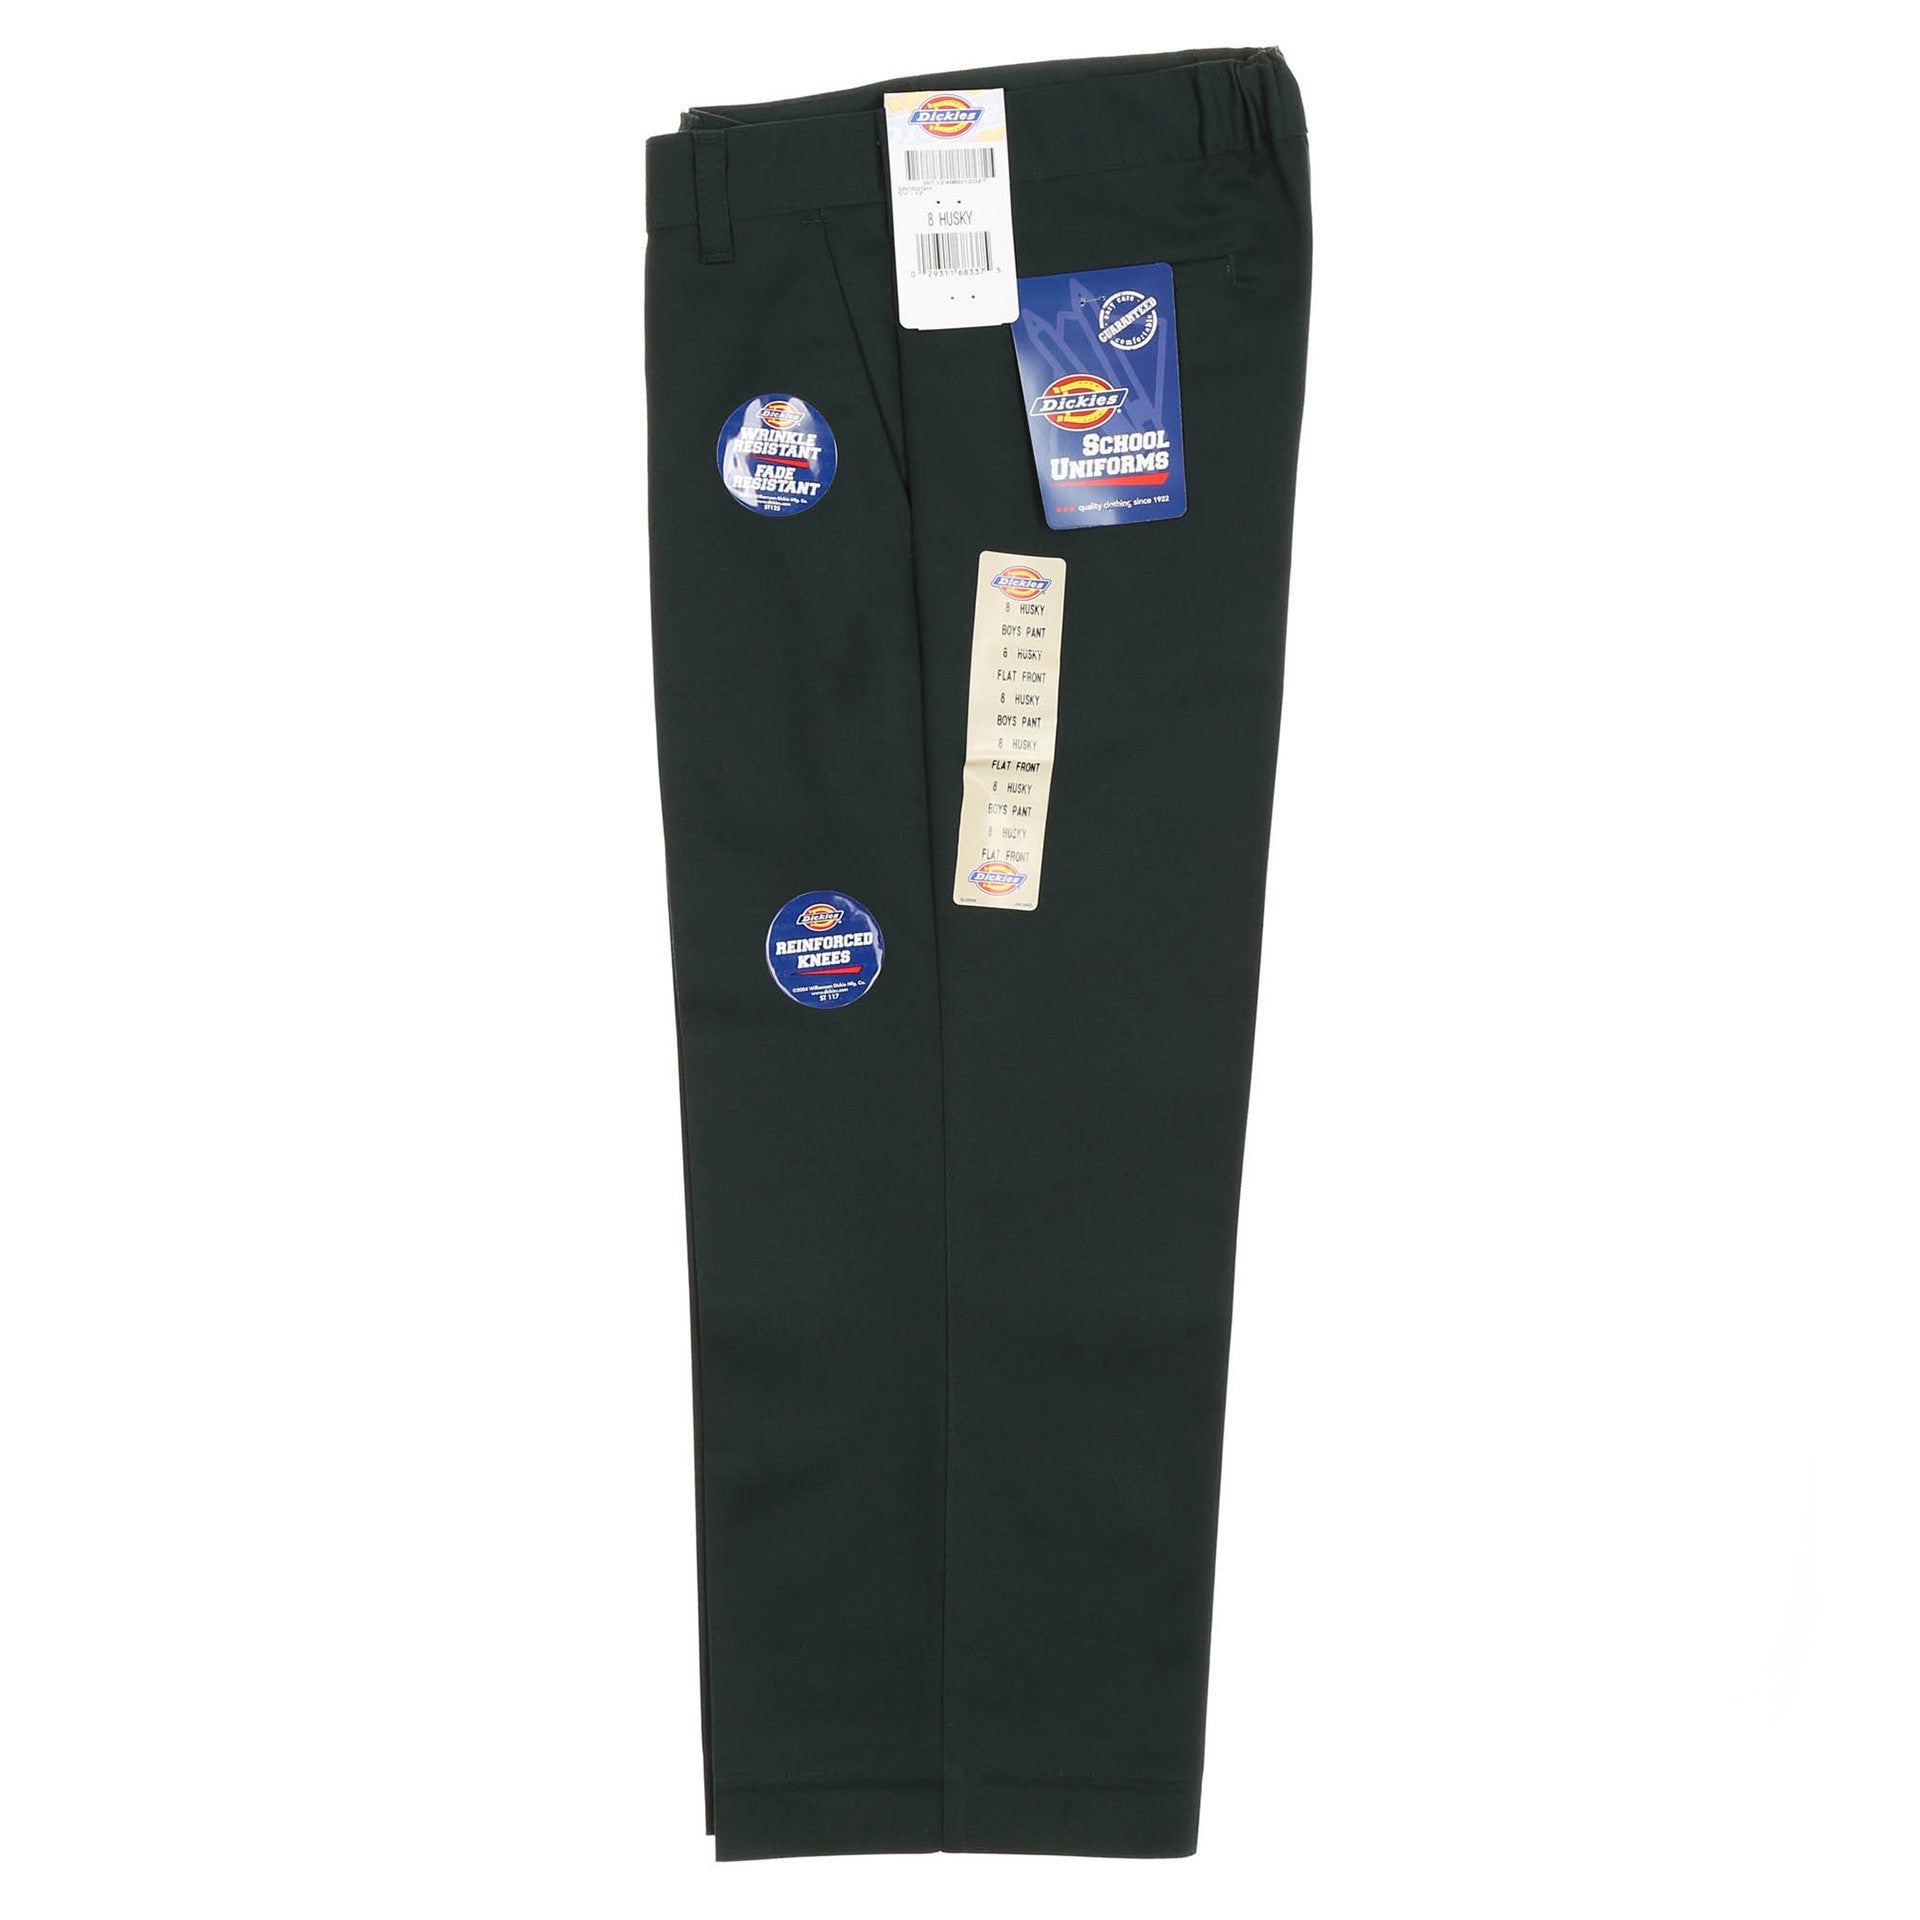 505™ Regular Fit Husky Big Boys Jeans 8-20 - Medium Wash | Levi's® US